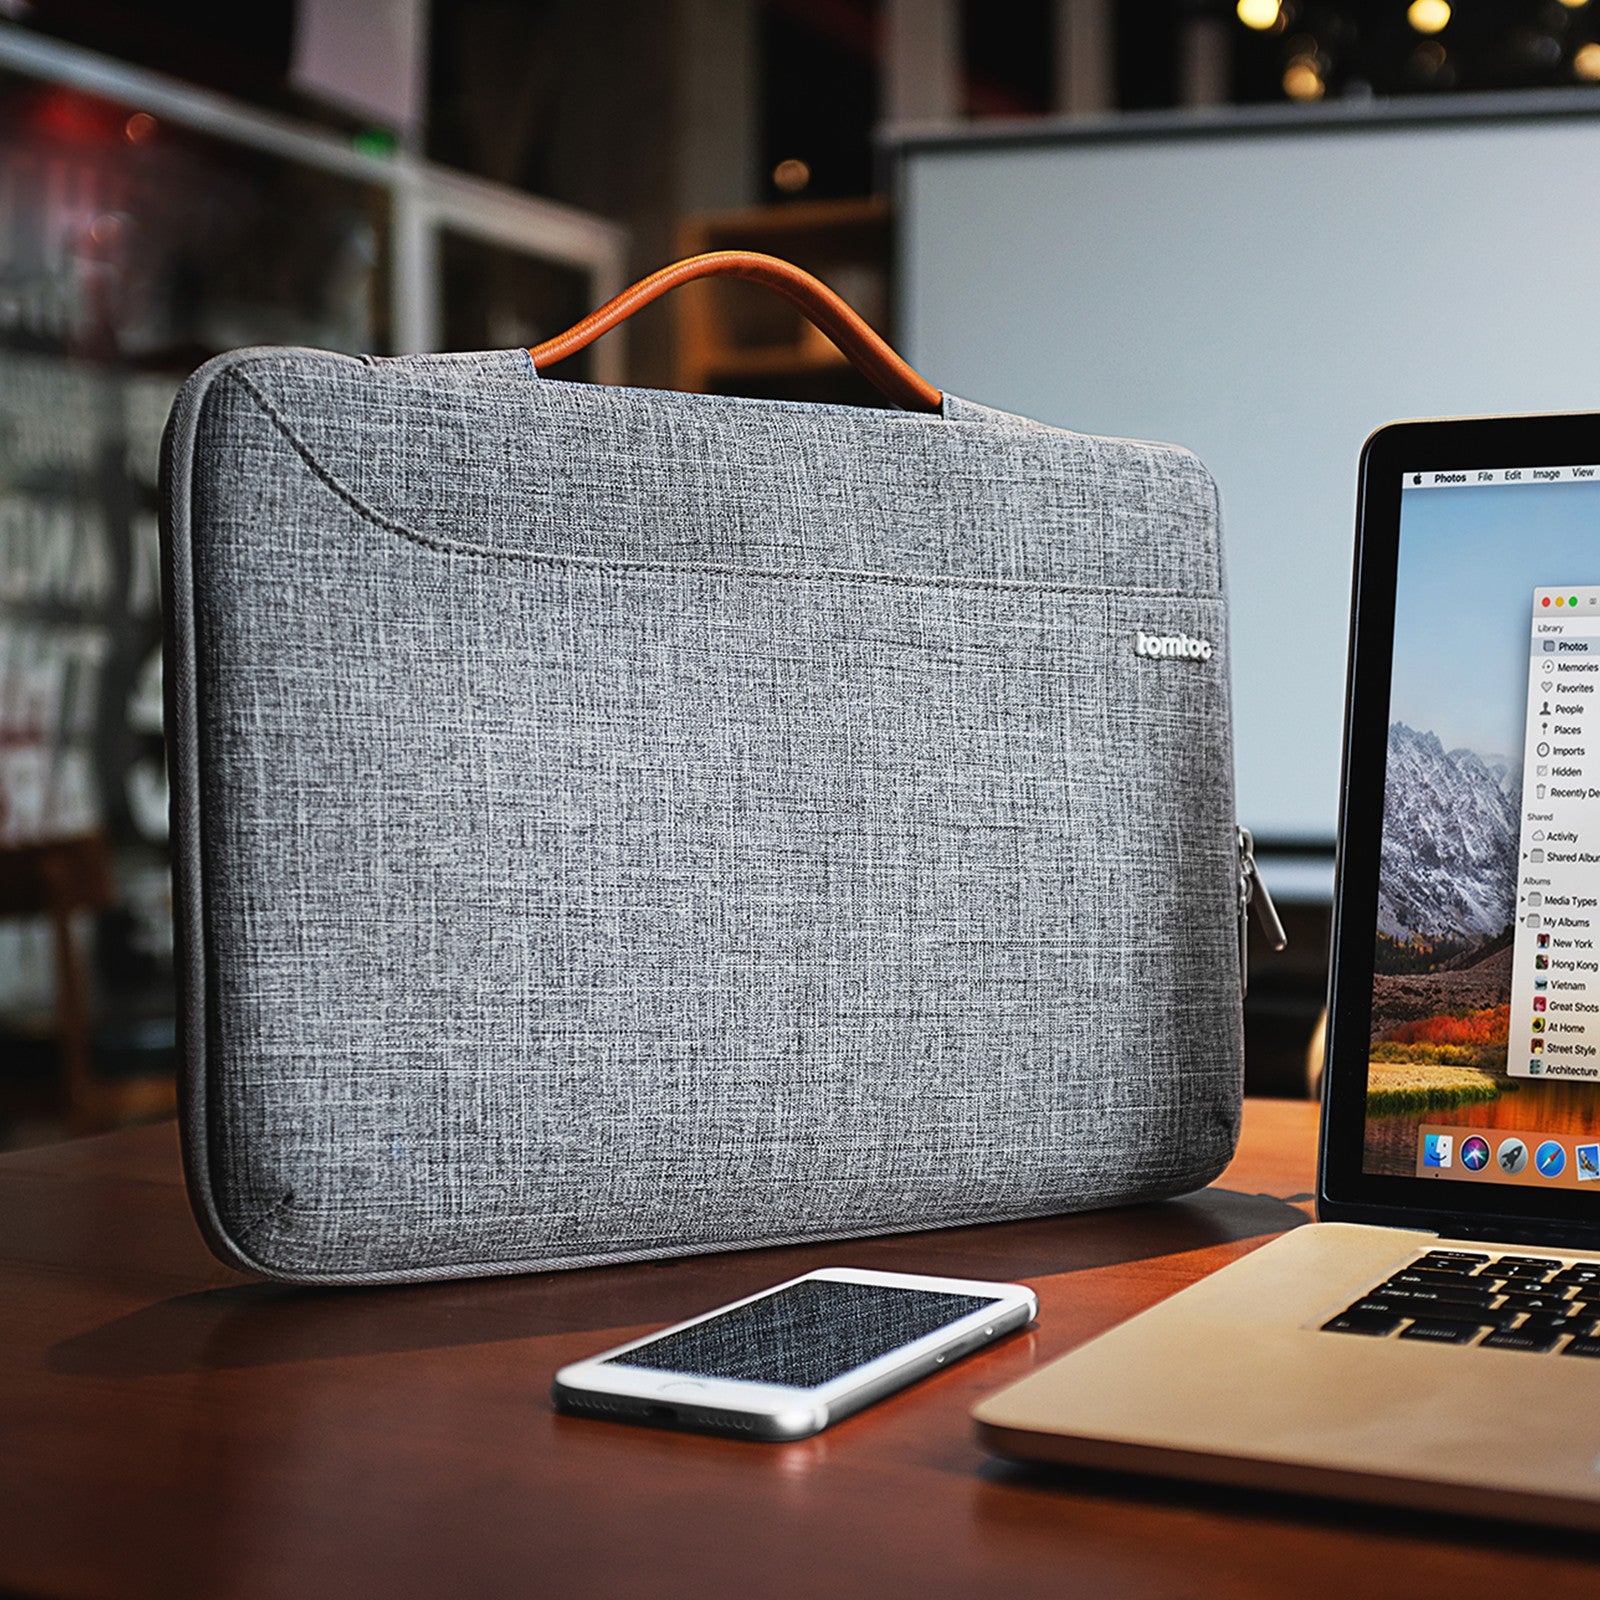 Defender-A22 Laptop Handbag For 14-inch MacBook Pro